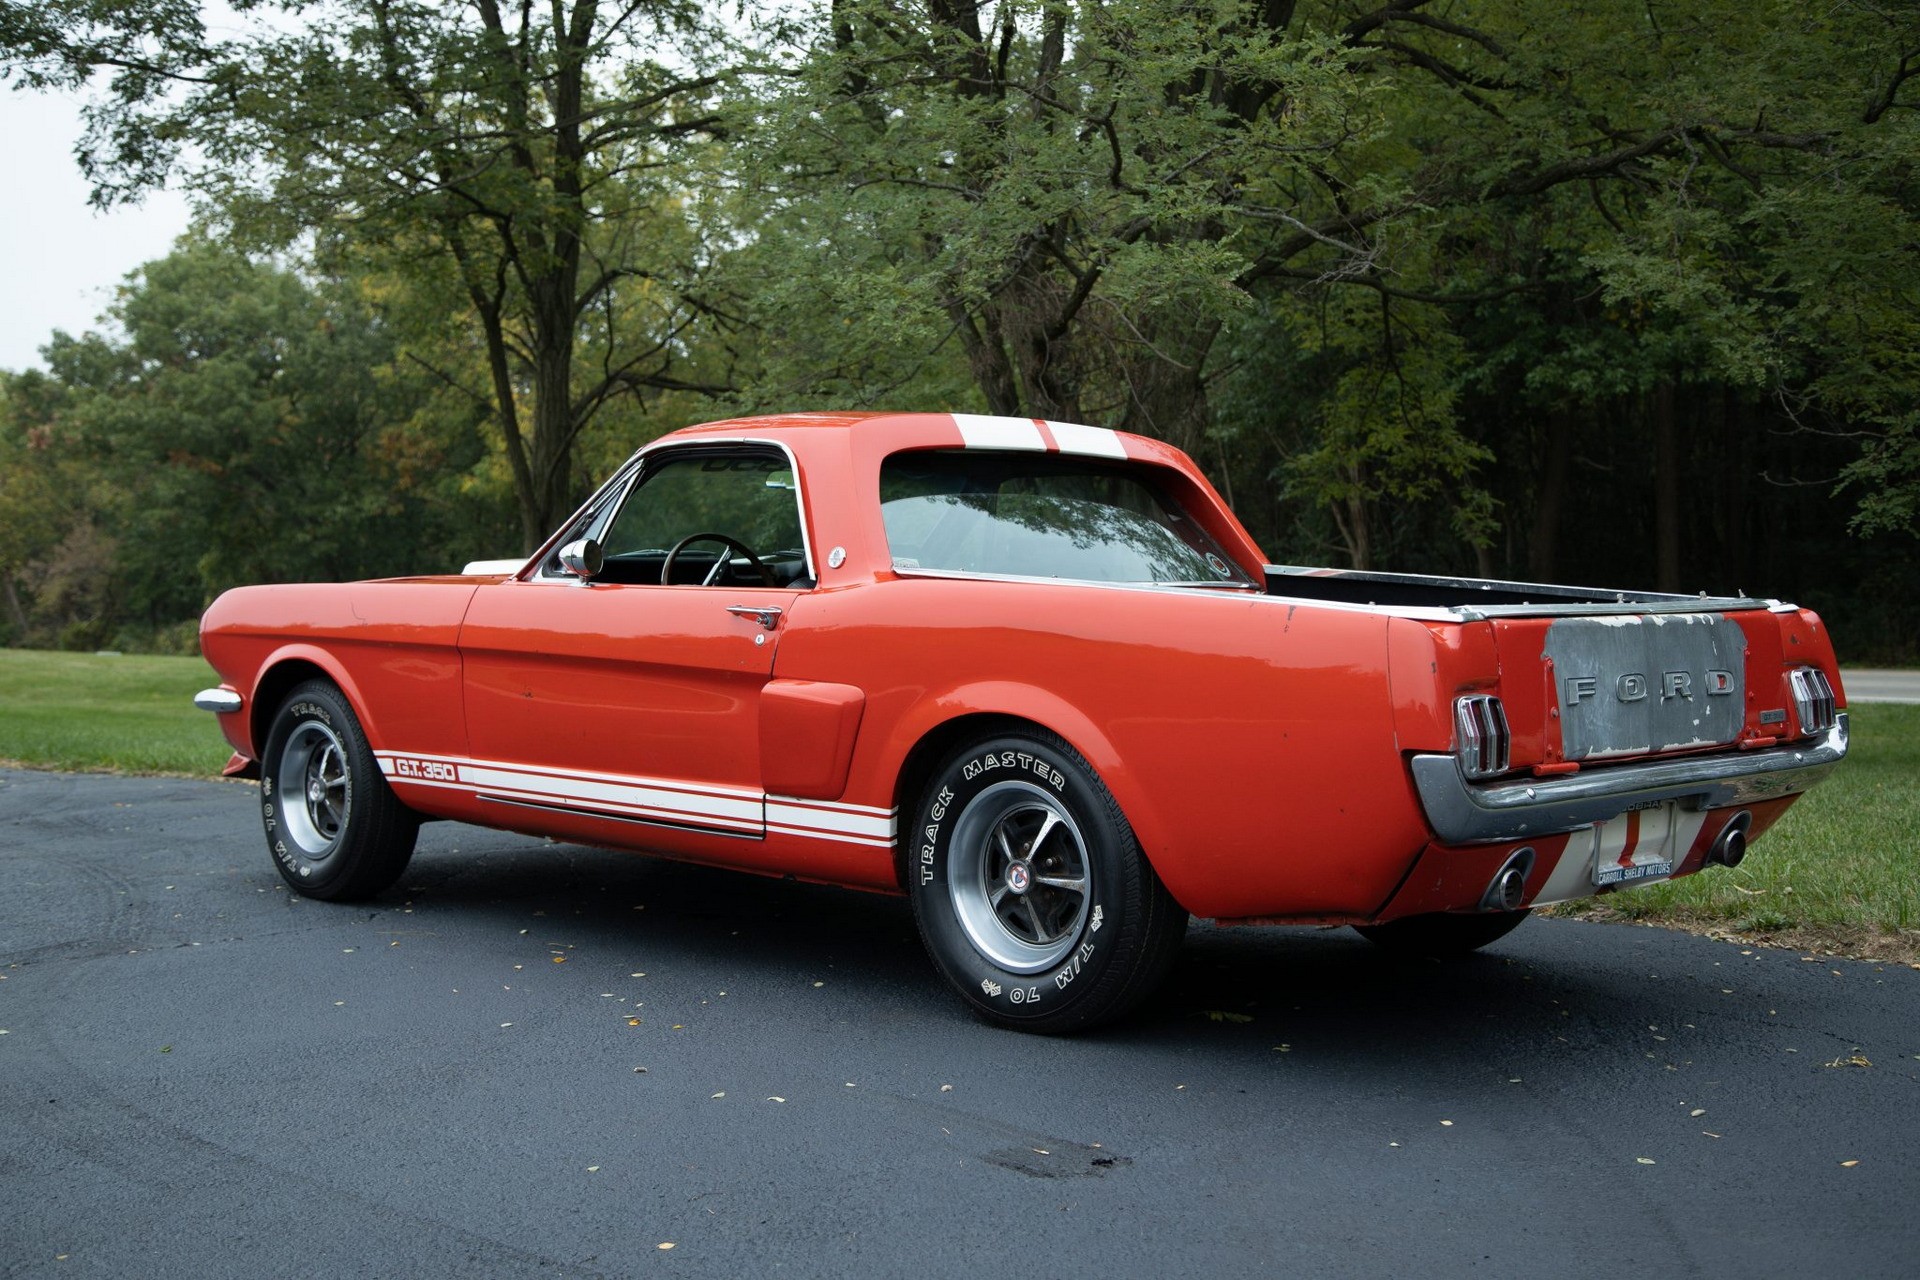 Пикап Ford Mustang 1966 года выпуска как рабочая лошадка